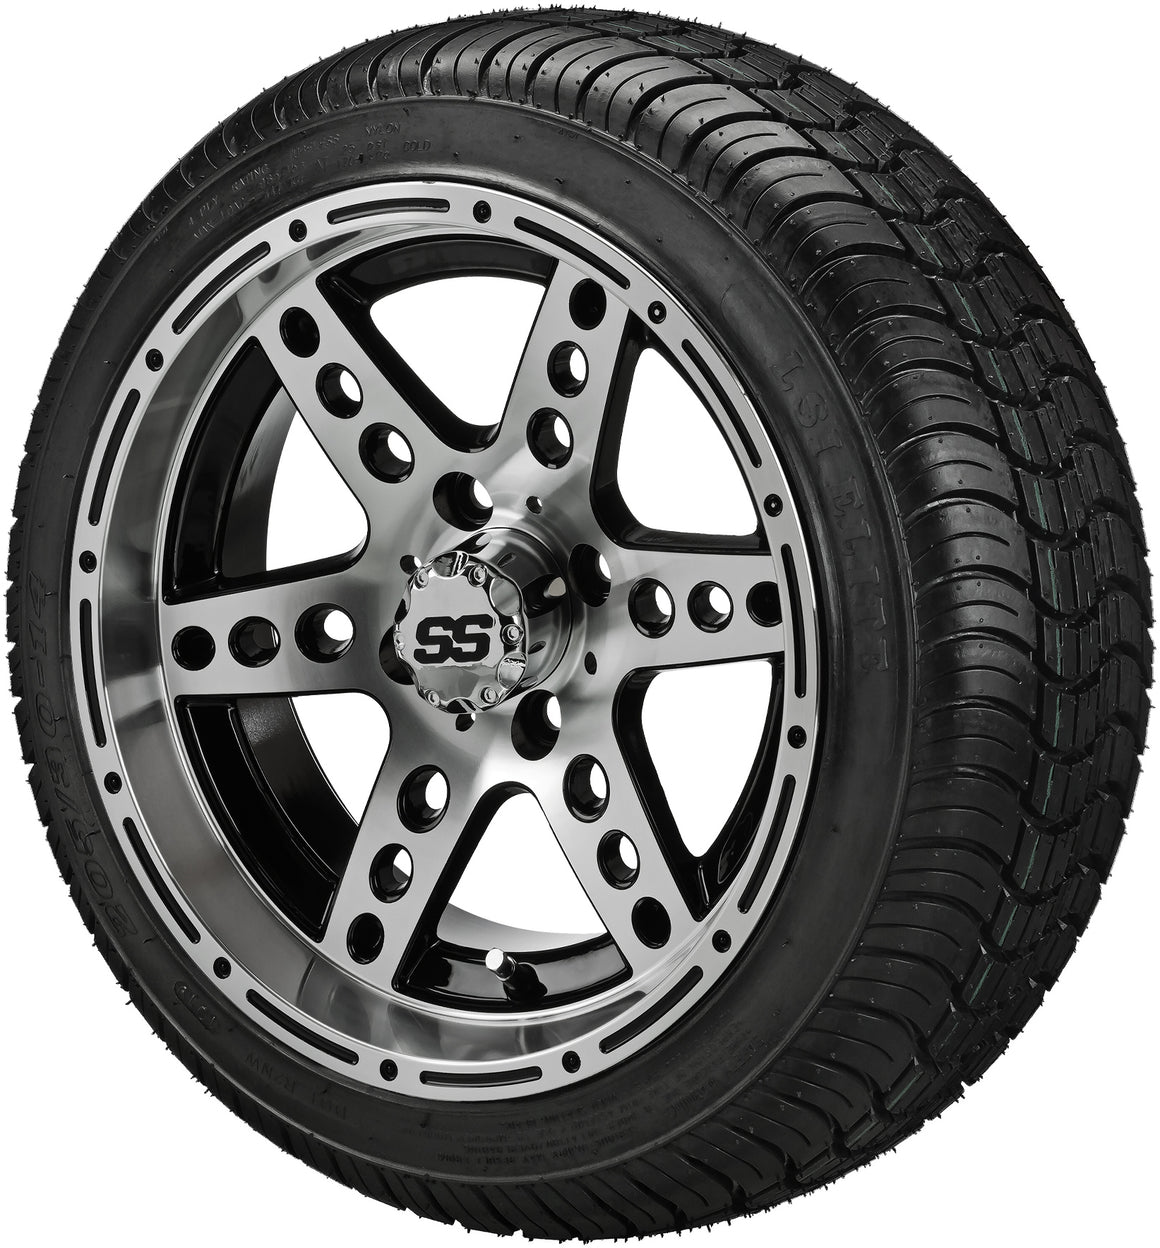 14" Chaos Wheels on 205/30-14 LSI Elite Tires